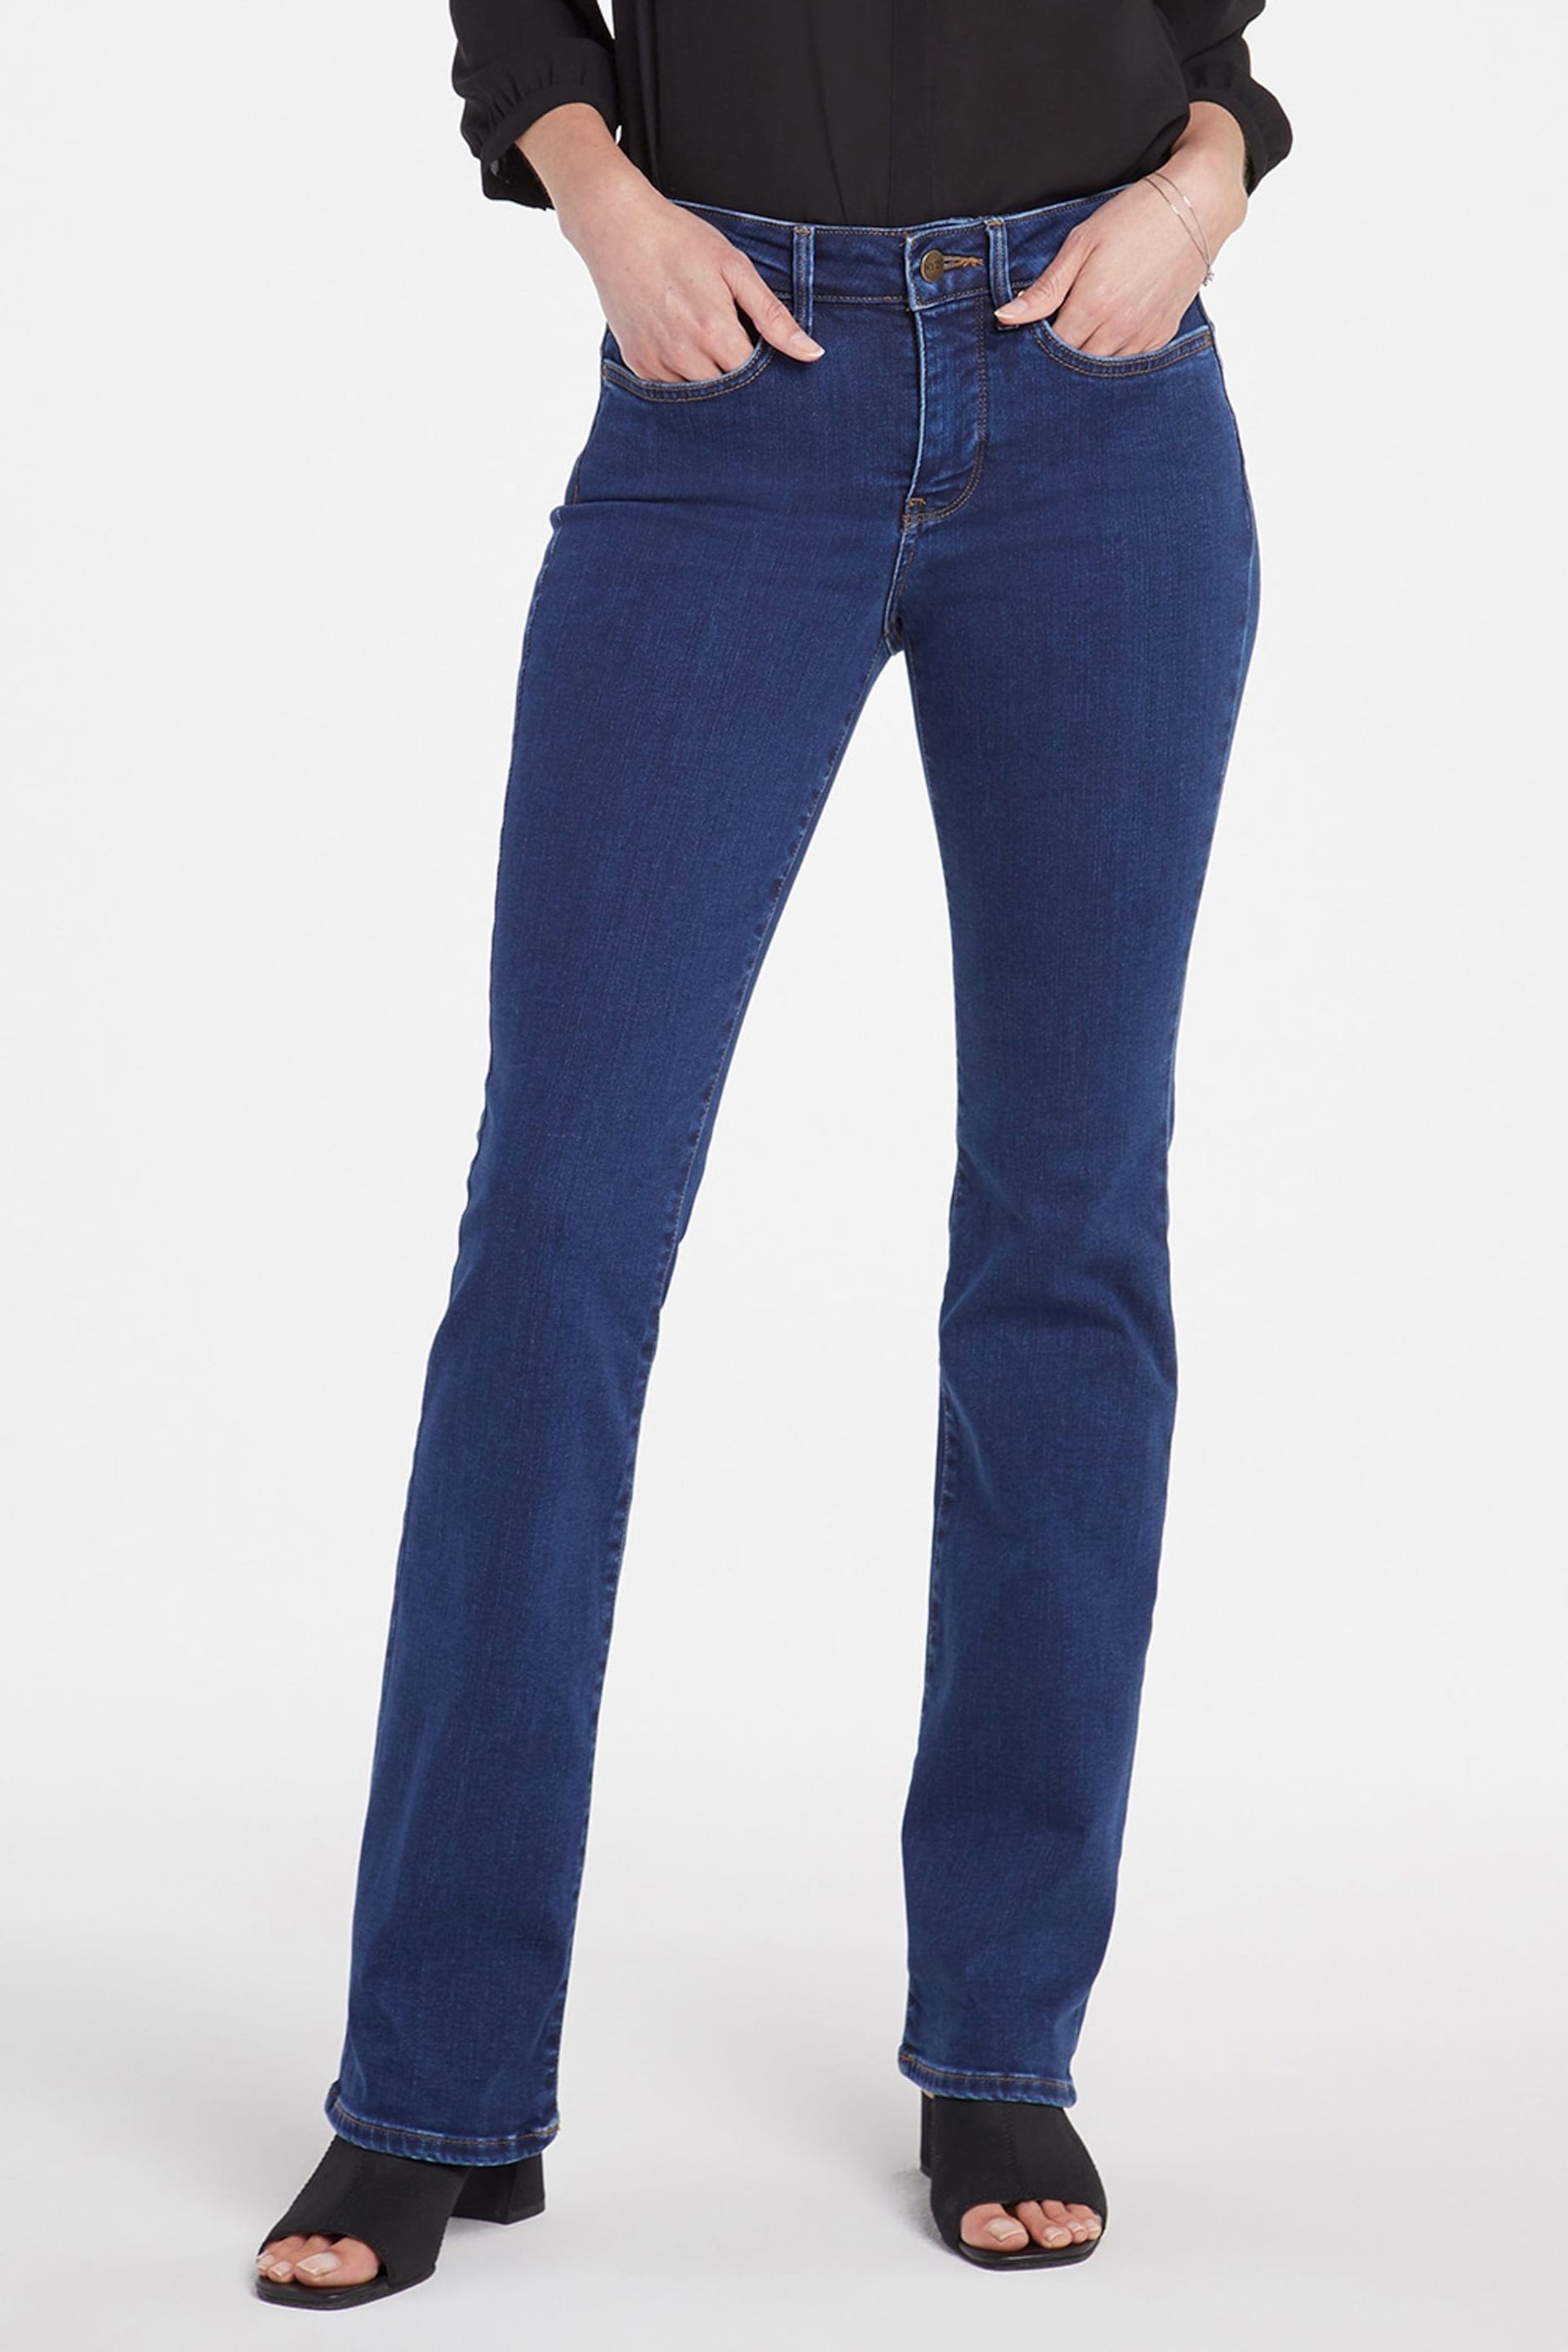 NYDJ Barbara Bootcut Jeans - Image 4 of 4